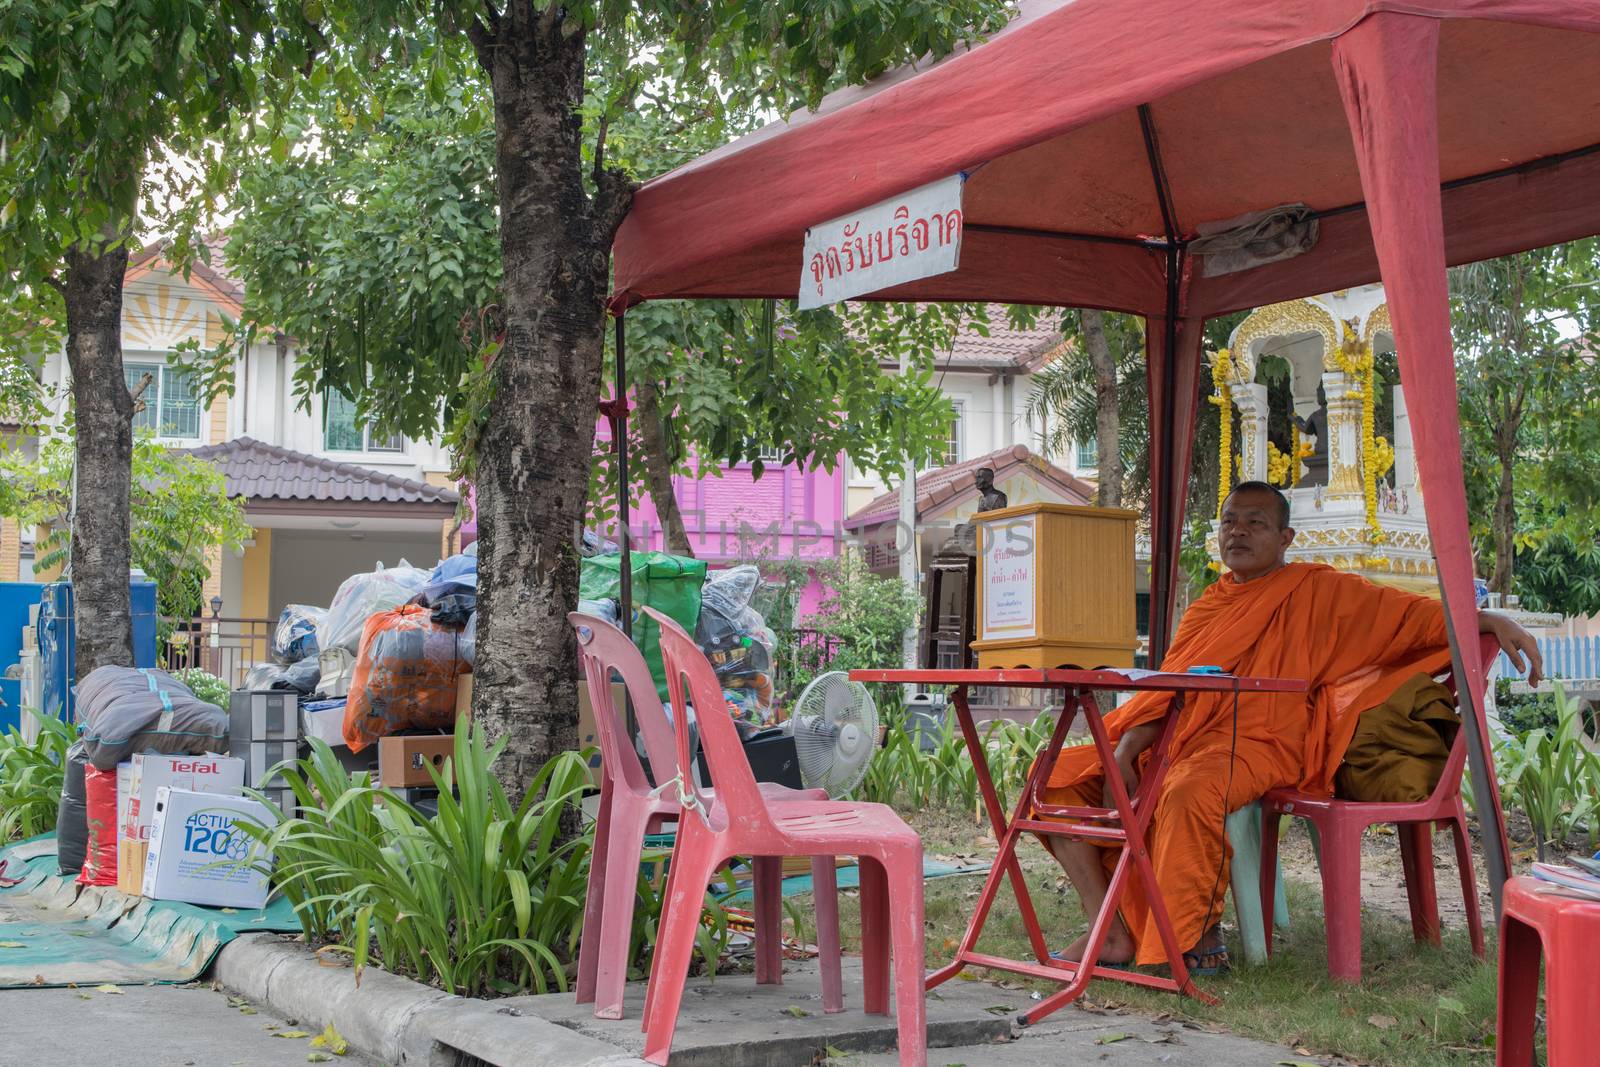 Bangkok, Thailand - October 14, 2015 : Thai monk volunteer waiting for donation at village in Don Mueang district.